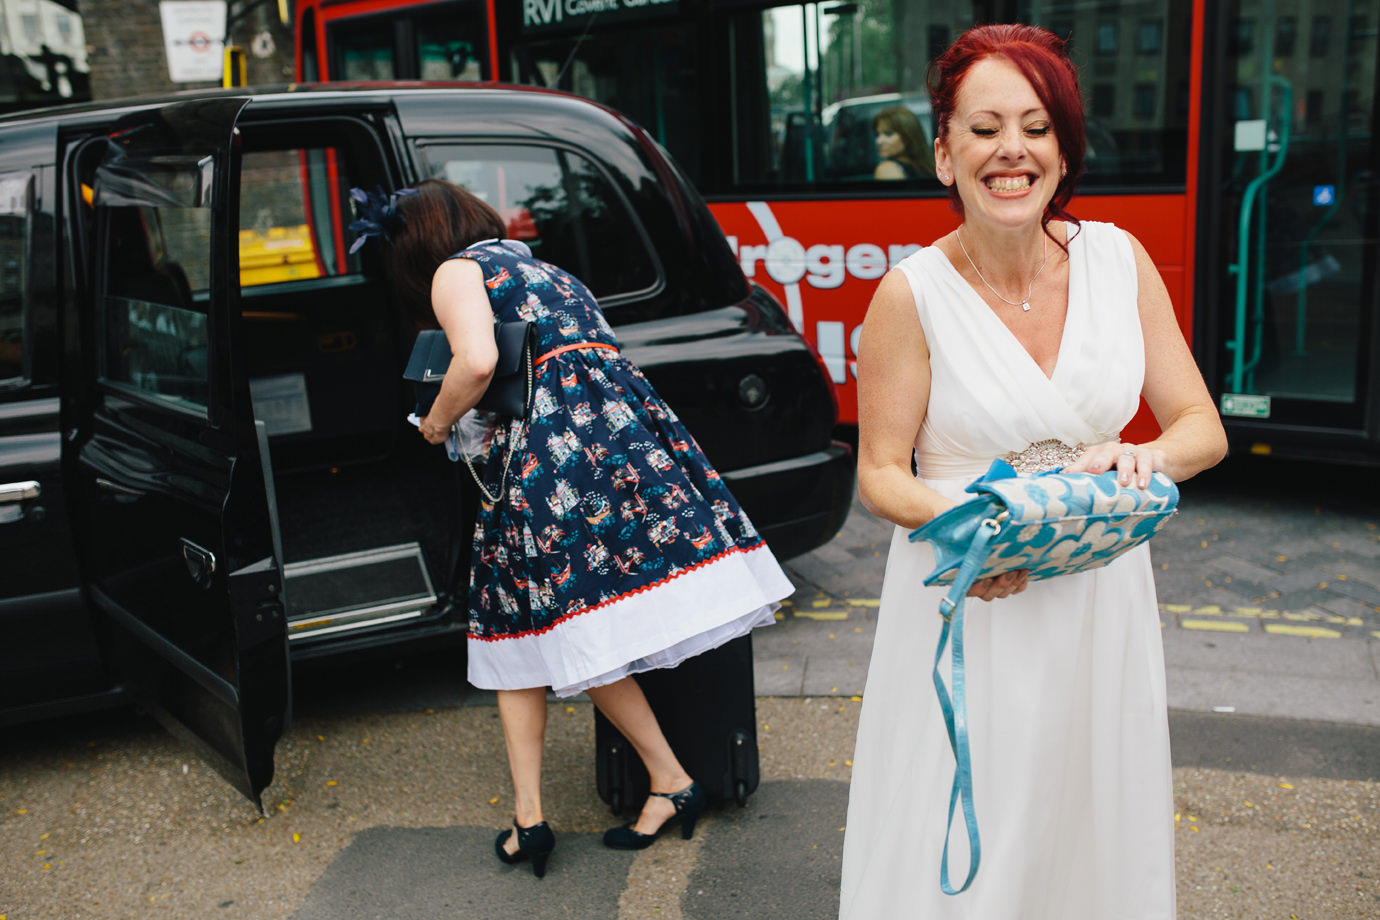 Black cab, red bus, Documentary wedding photography London